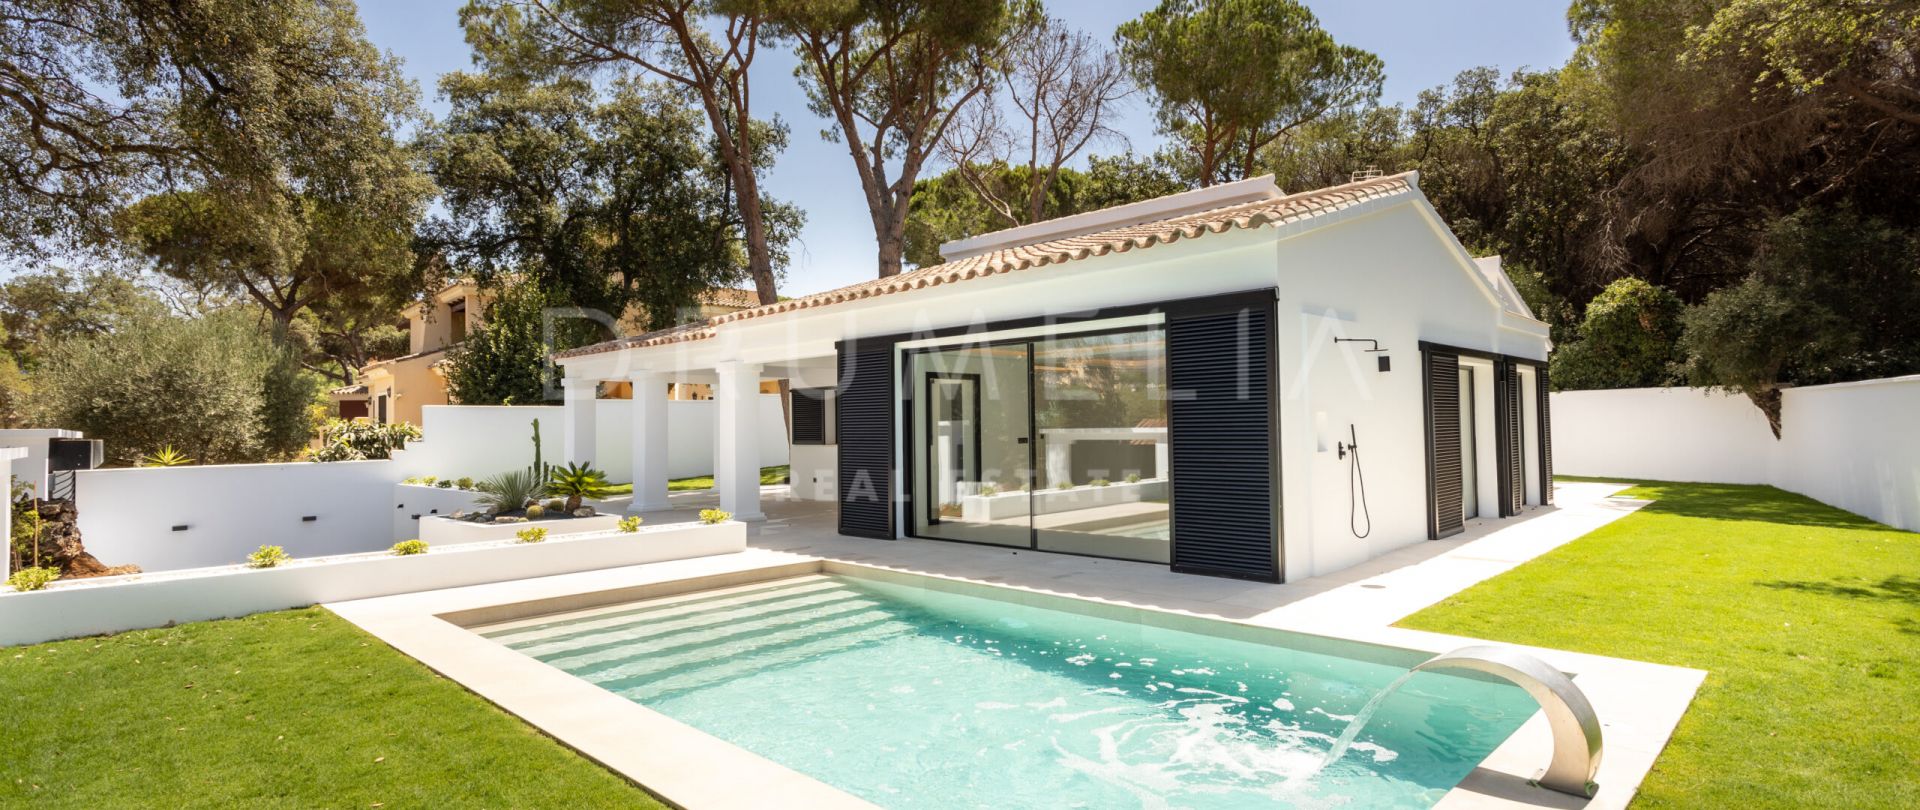 Charming Mediterranean luxury villa close to the beach in Elviria, East of Marbella.